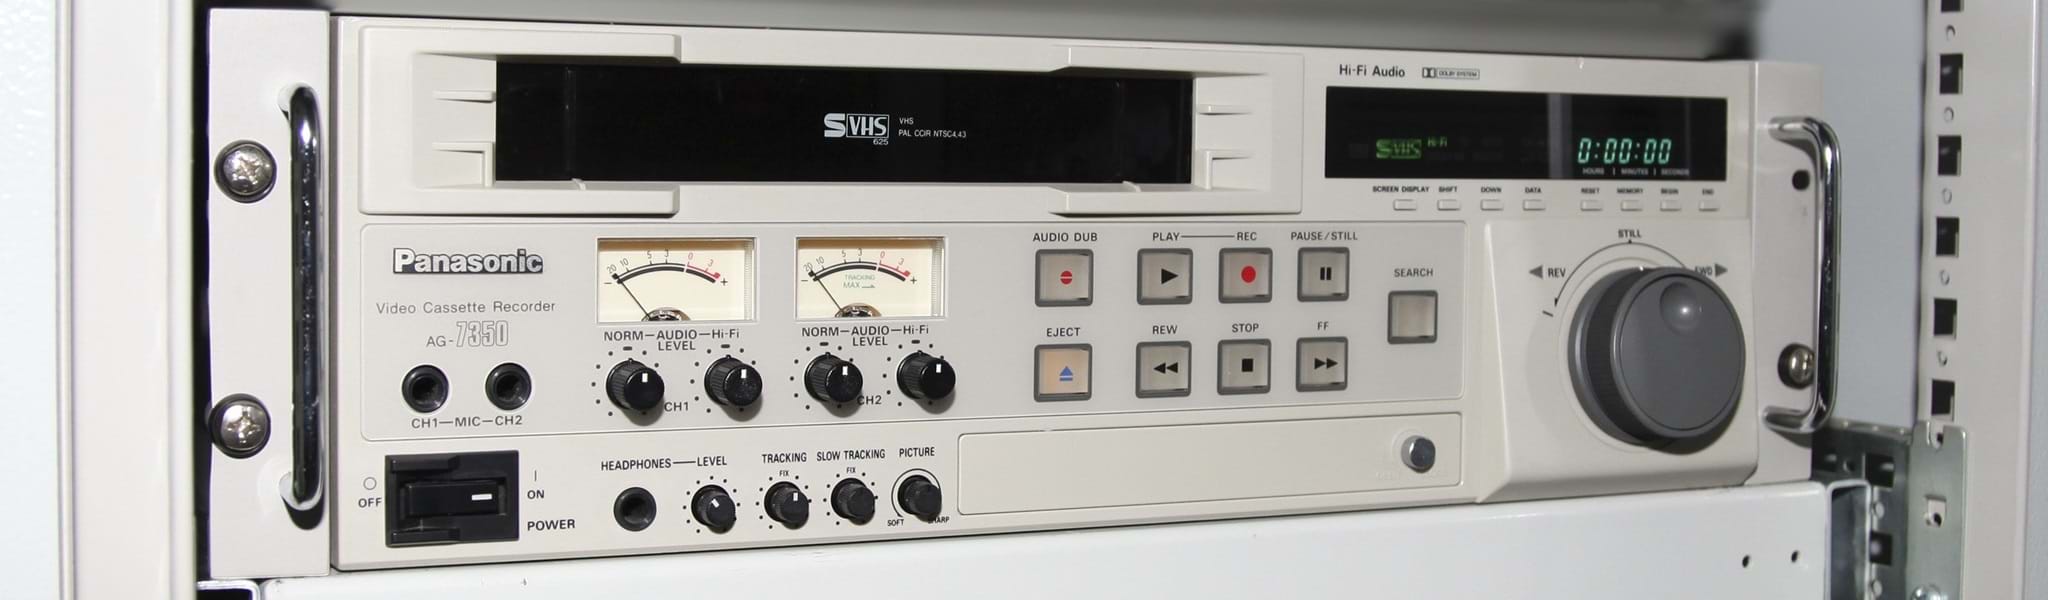 S-VHS digitalisieren lassen in der Schweiz